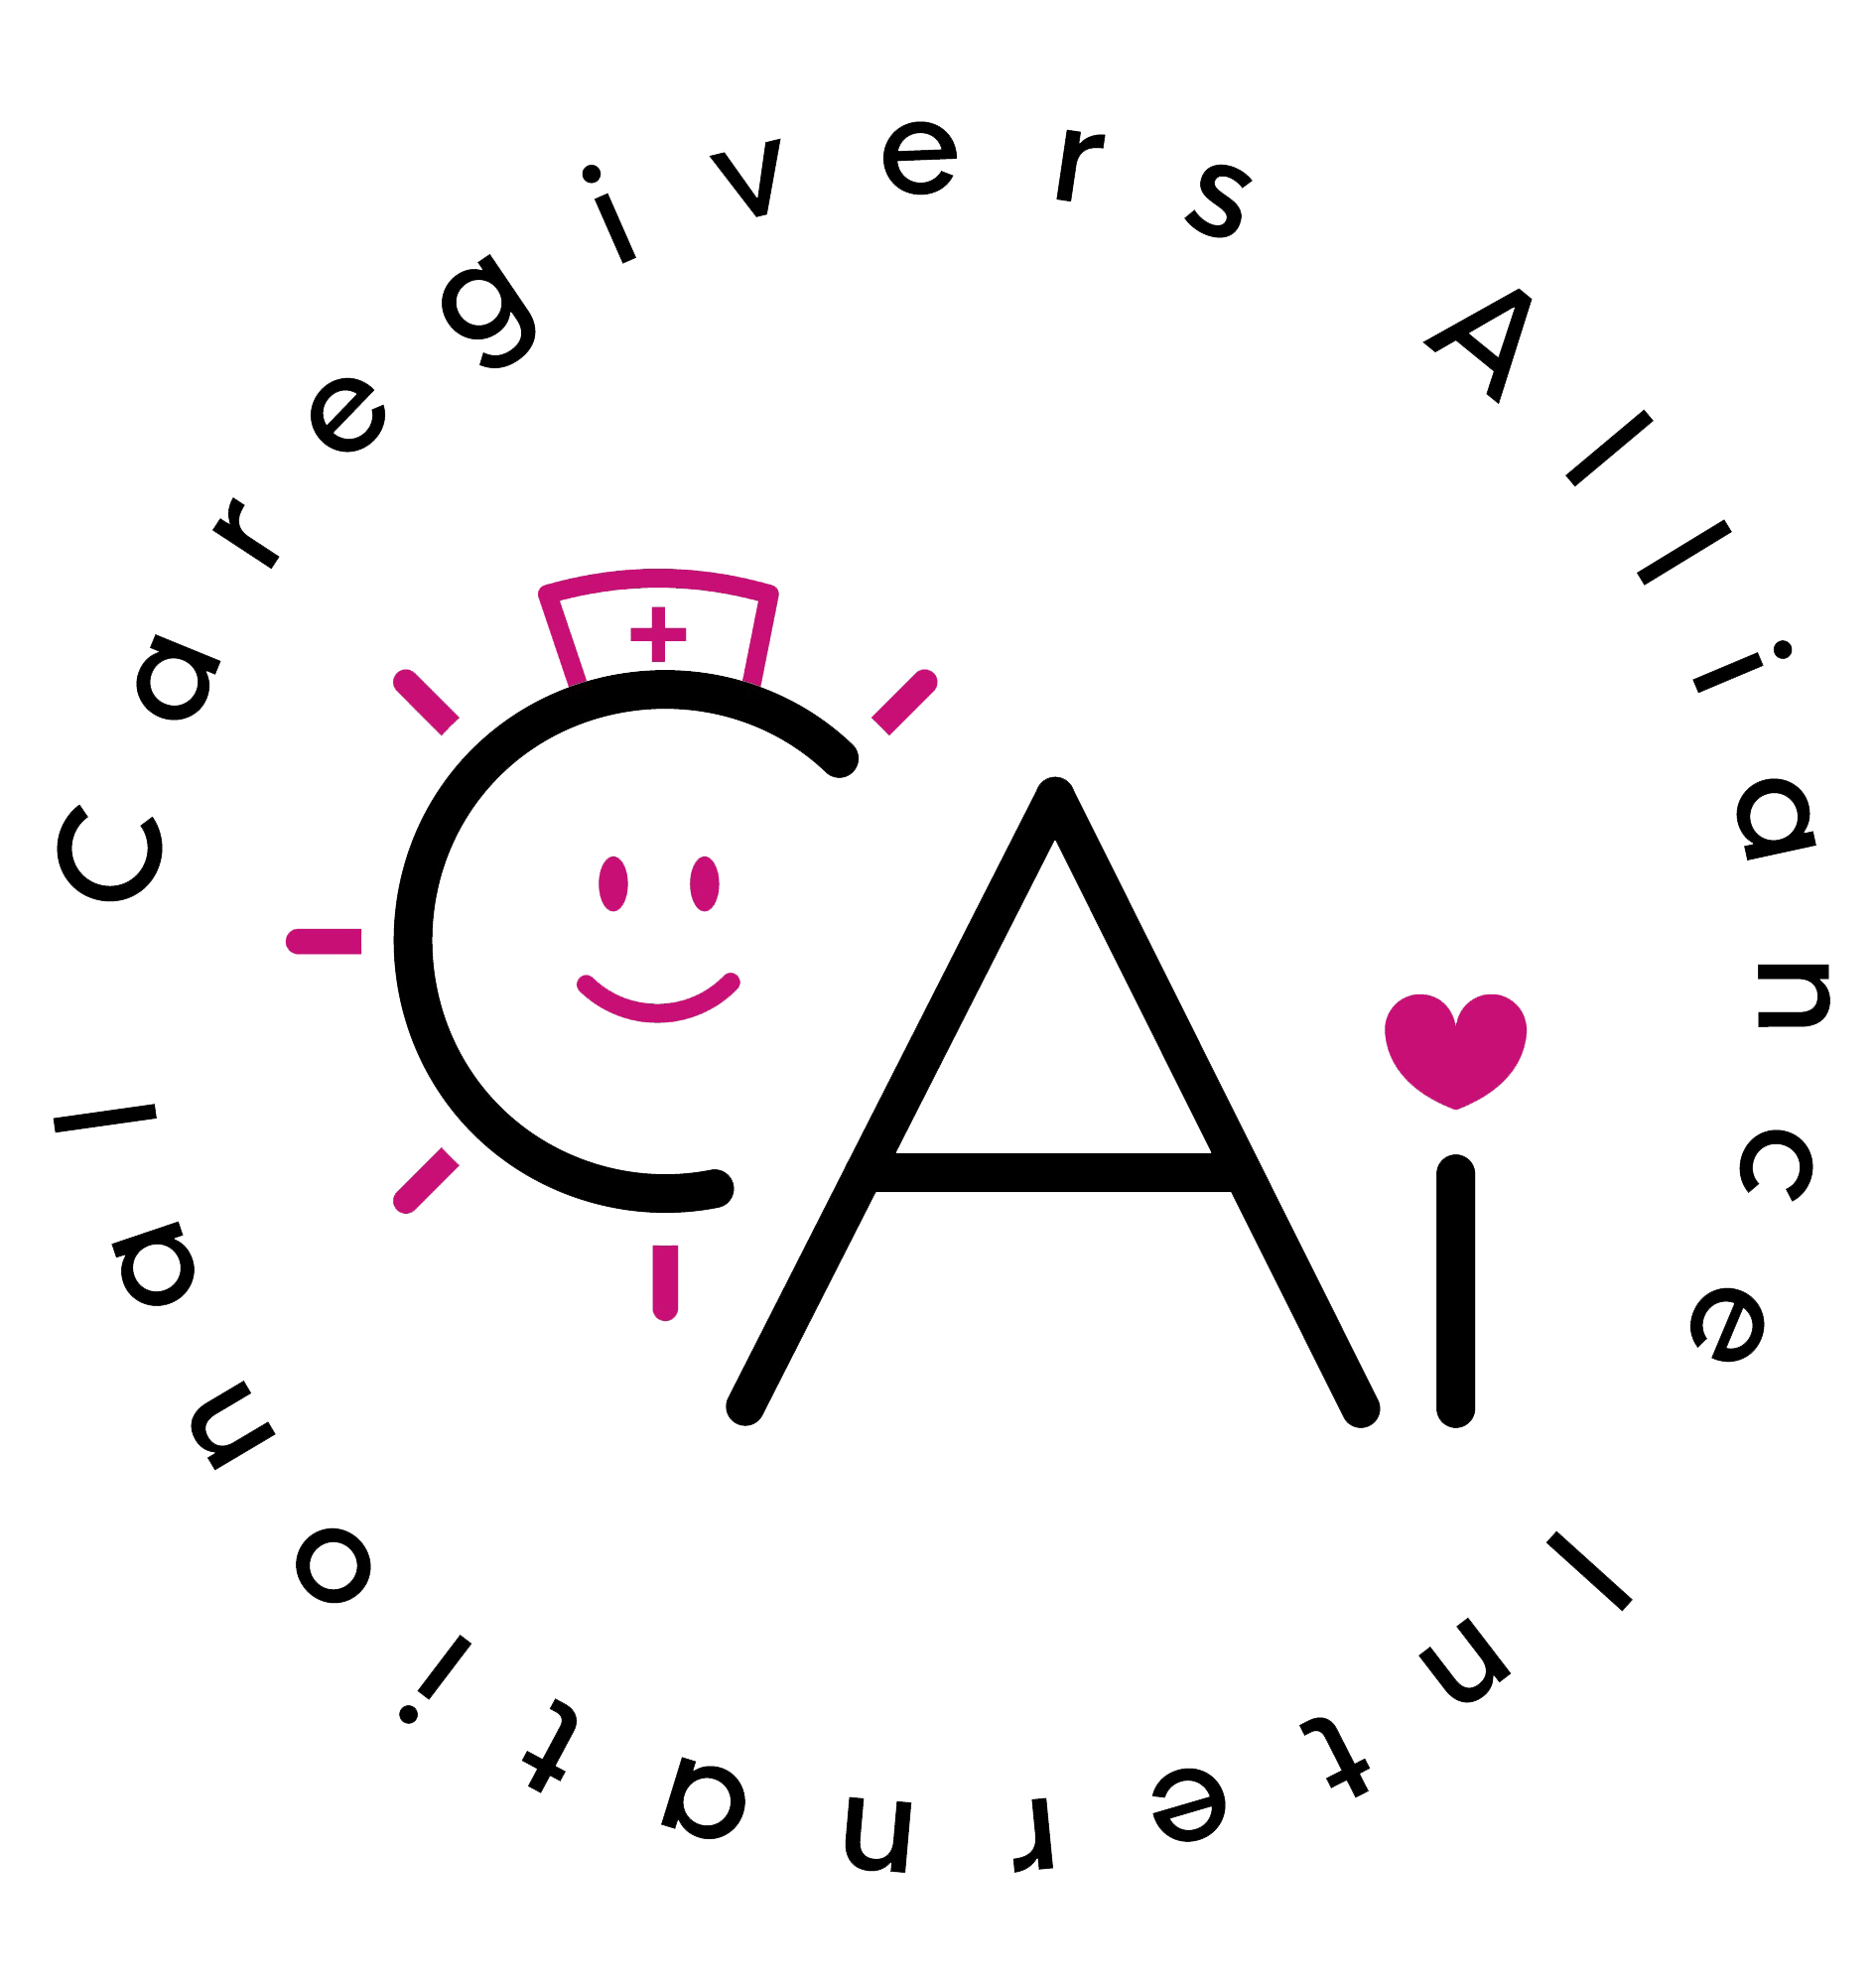 Caregivers Alliance International Limited